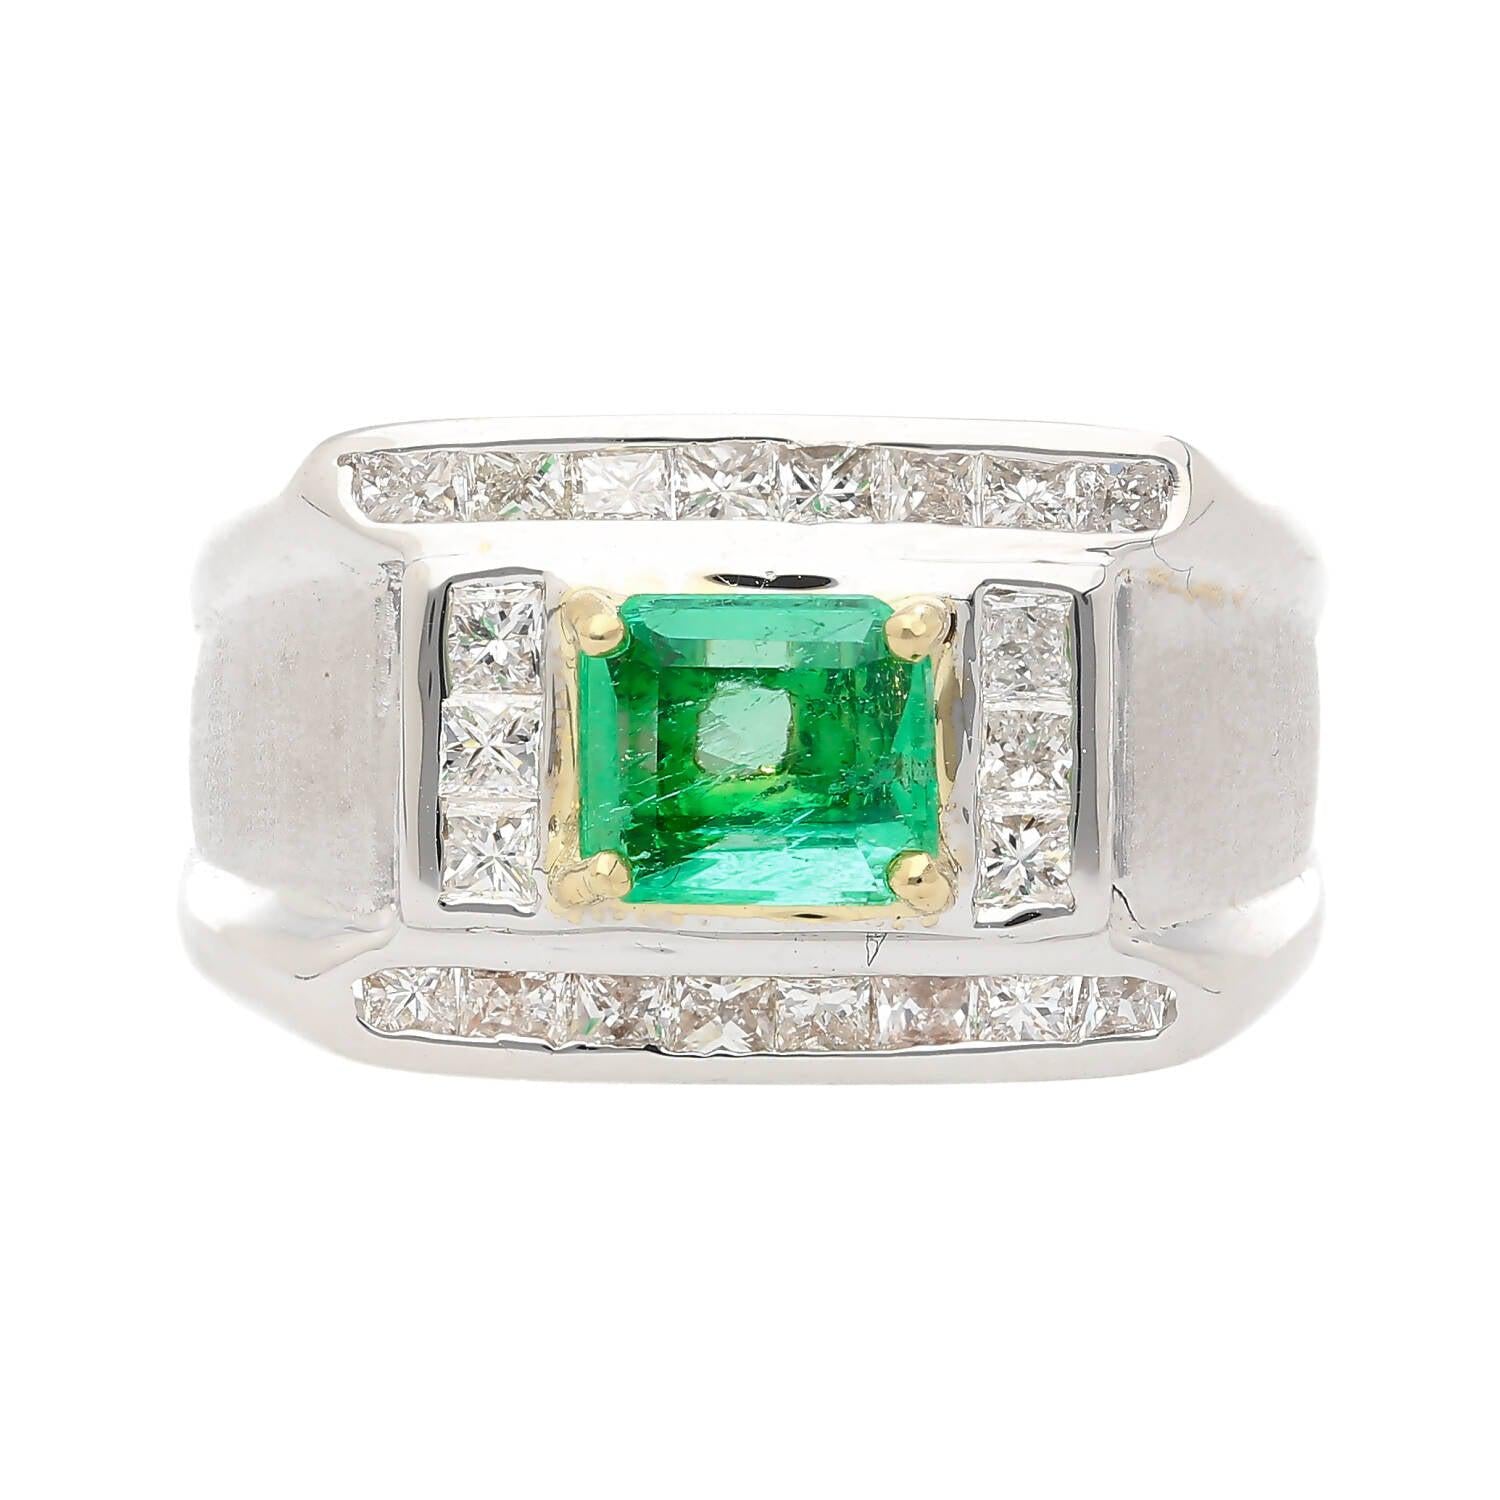 18K-White-Gold-1-Carat-Natural-Emerald-Mens-Ring-With-Princess-Cut-Diamonds-Rings.jpg